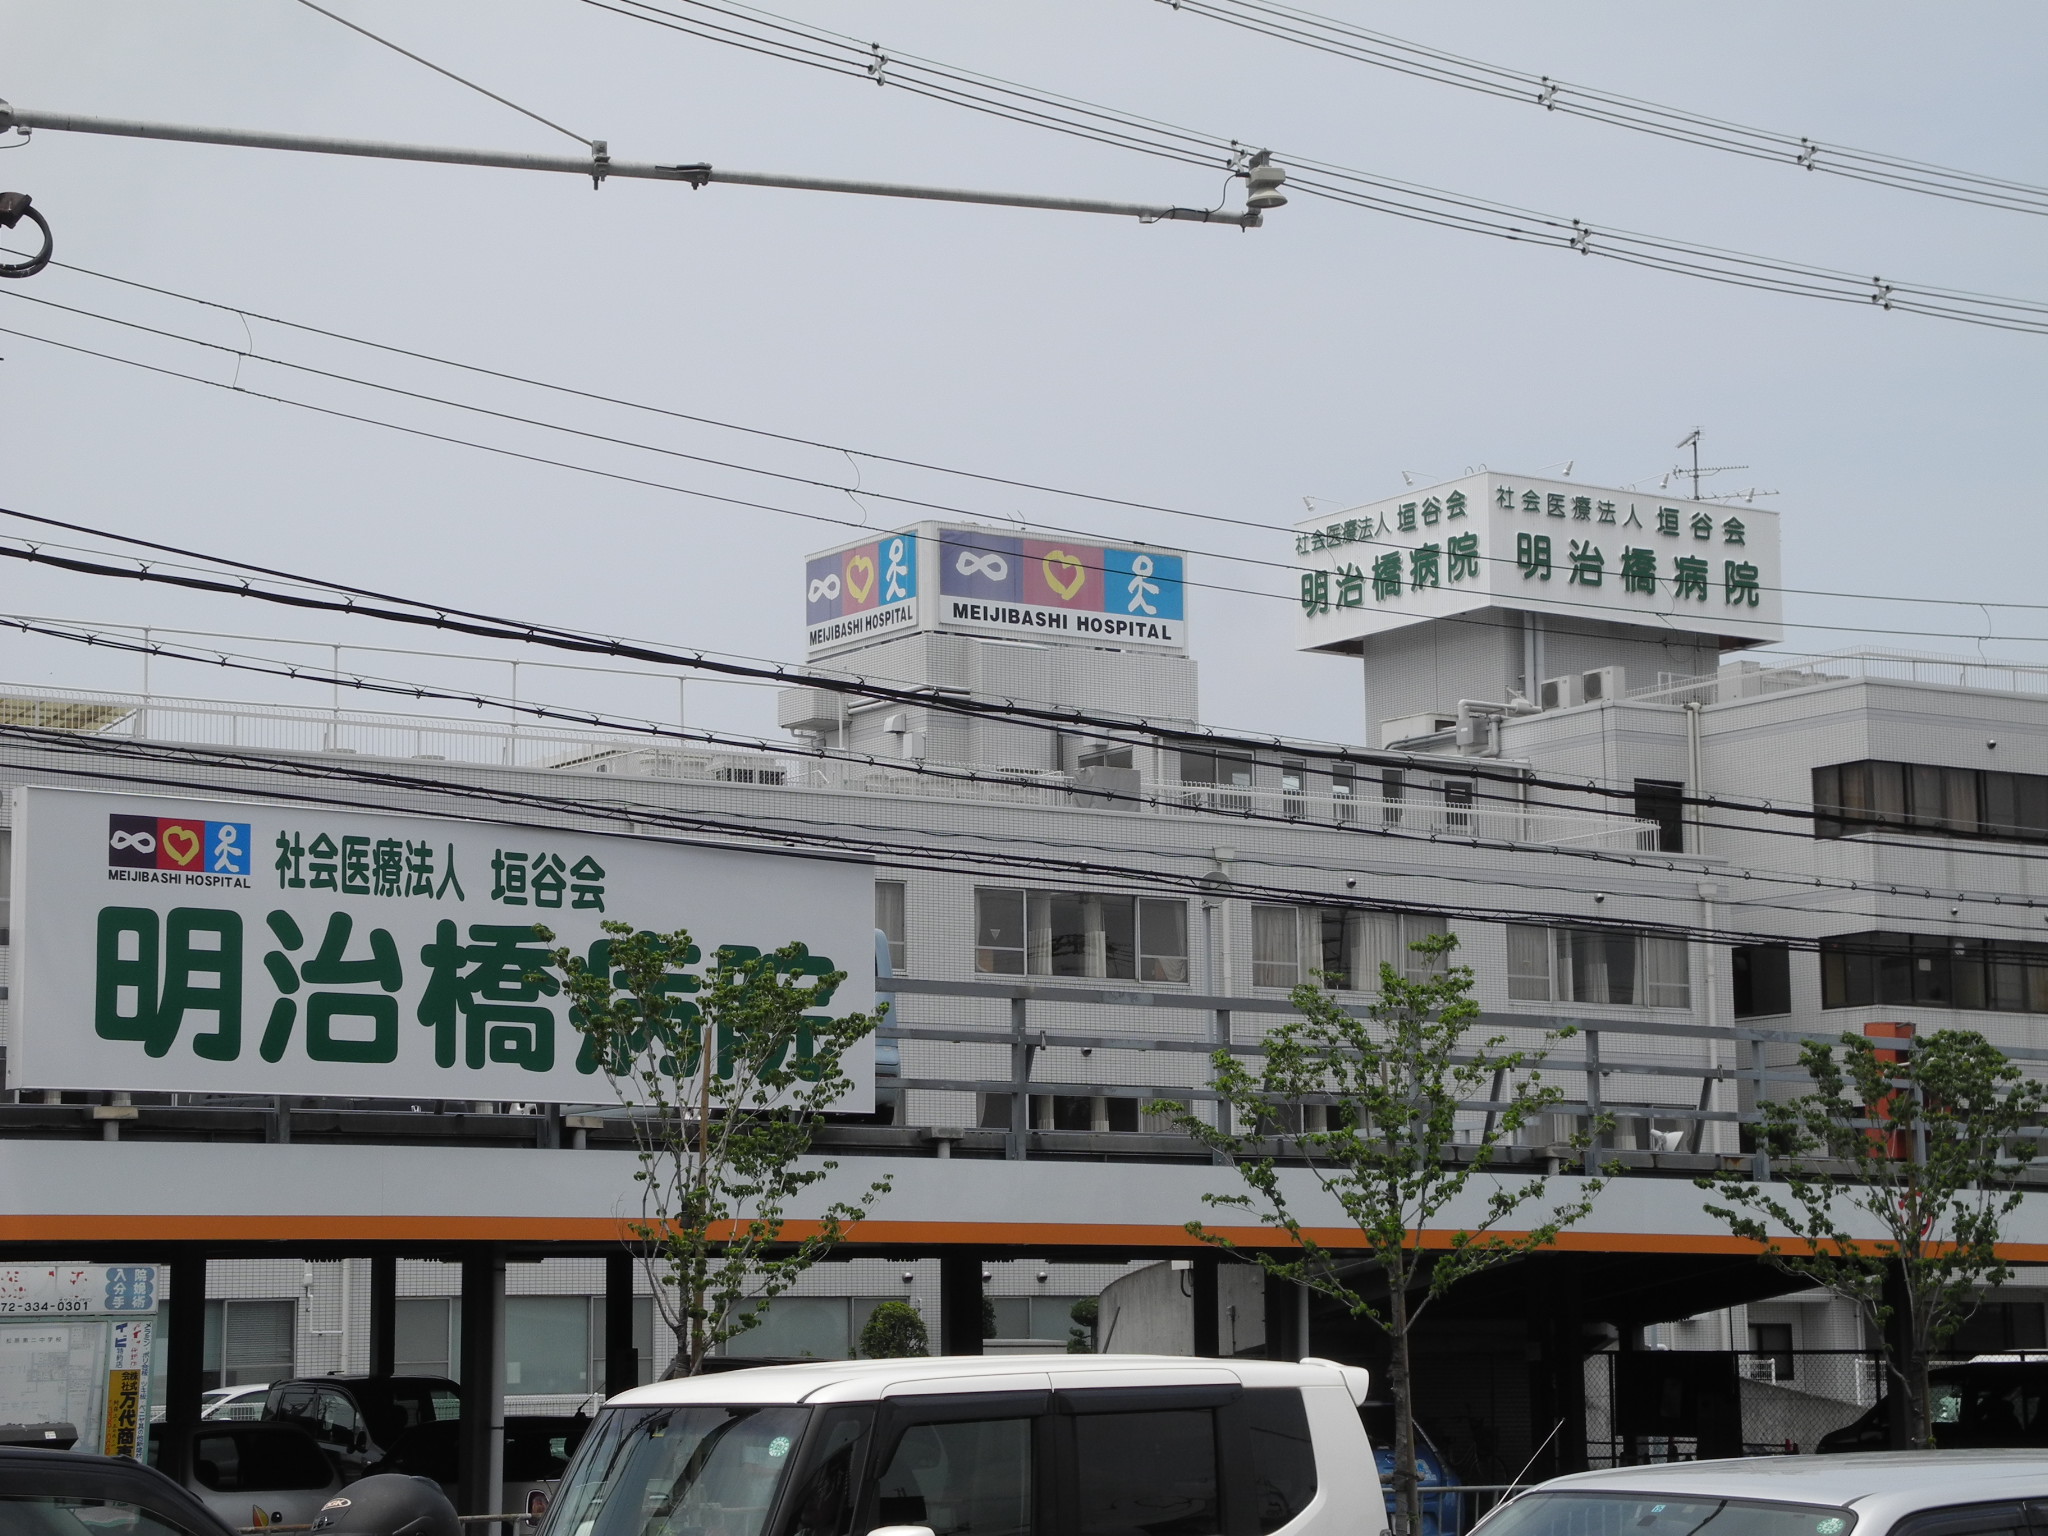 Hospital. 622m until the medical corporation Kakitani Board Meiji Bridge Hospital (Hospital)